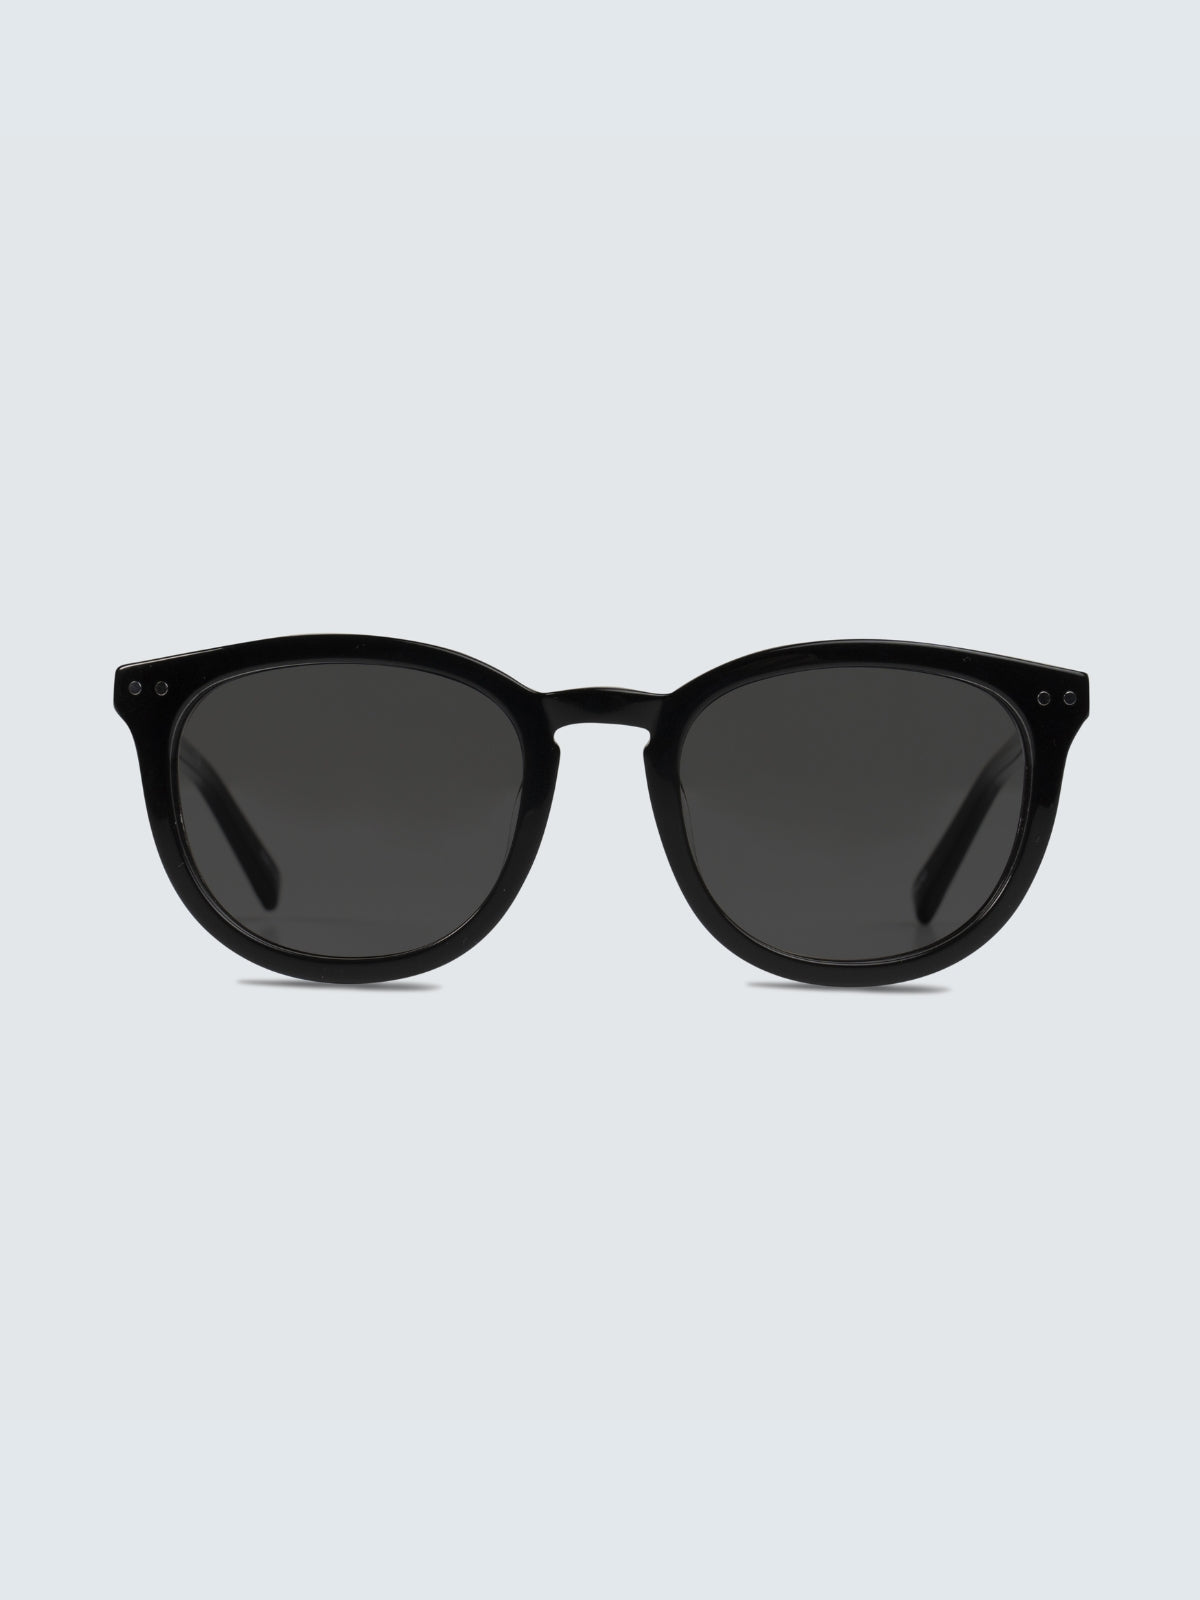 Two Blind Brothers - Sunglasses Cruz Tortoise